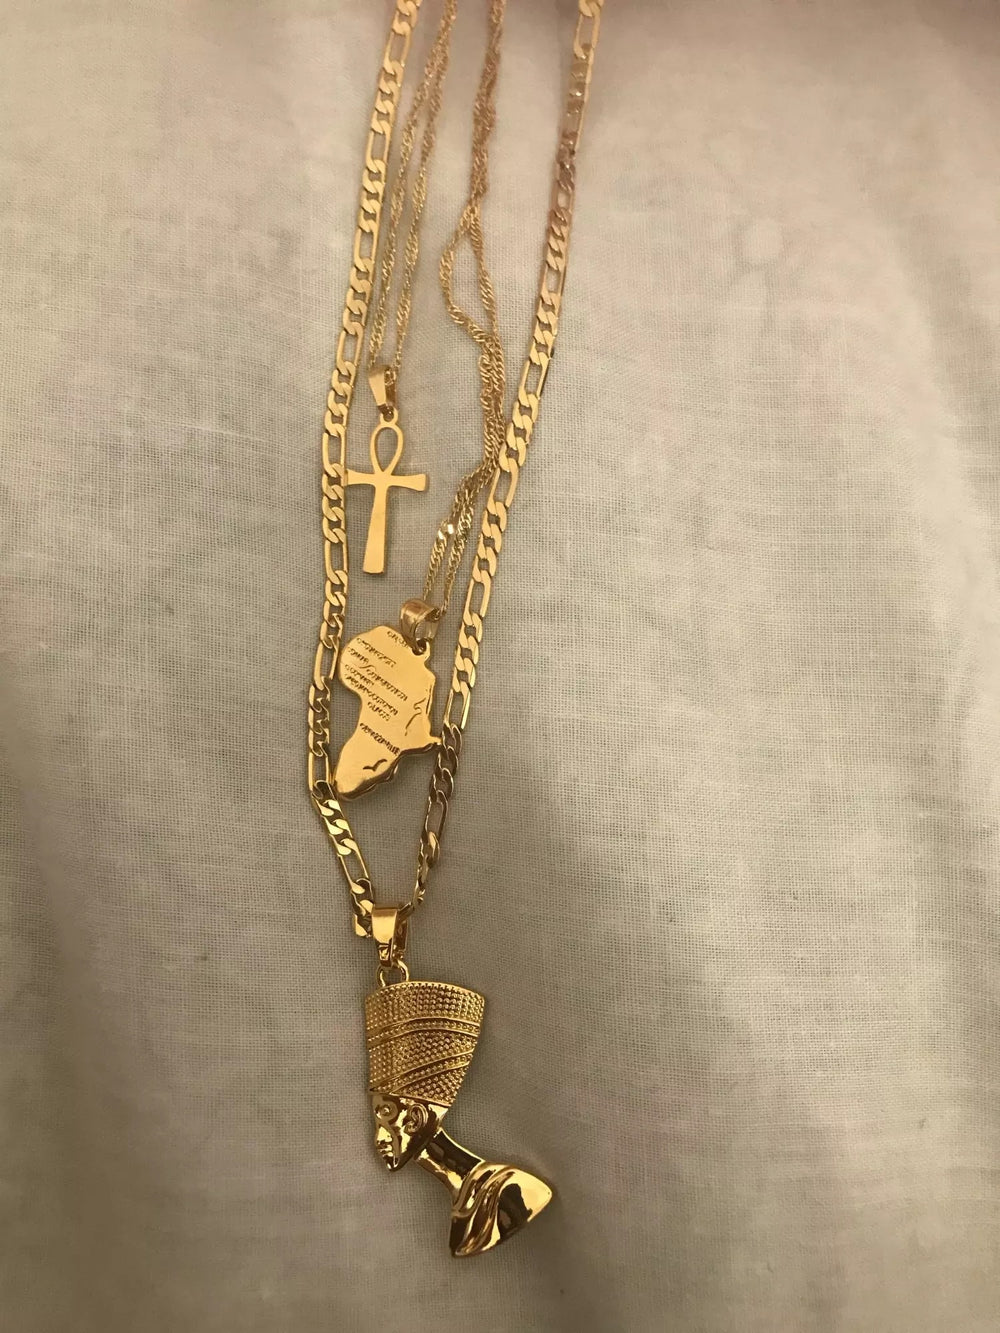 3 pieces Ankh, Nefertiti, and Africa map unisex gold necklace set.